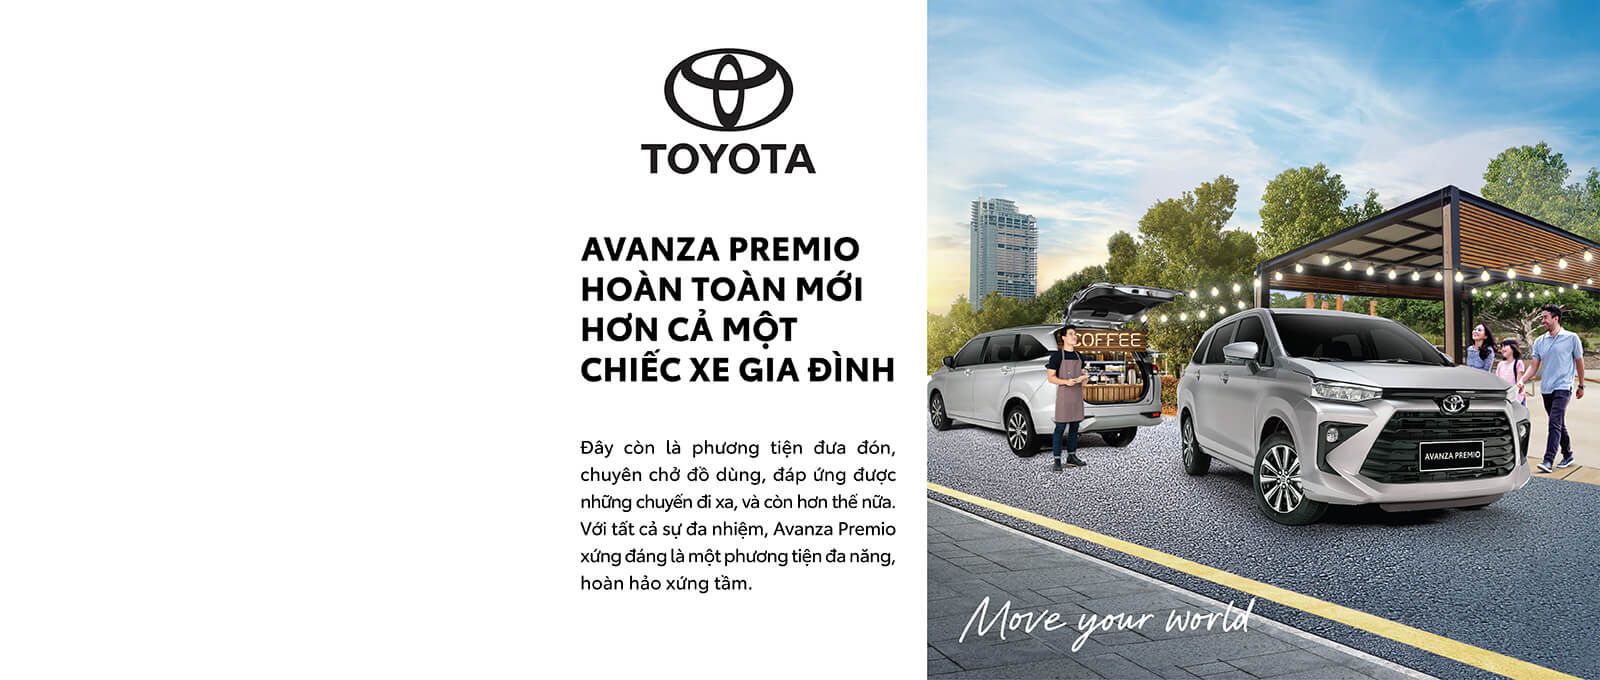 Trang chủ Toyota Avanza